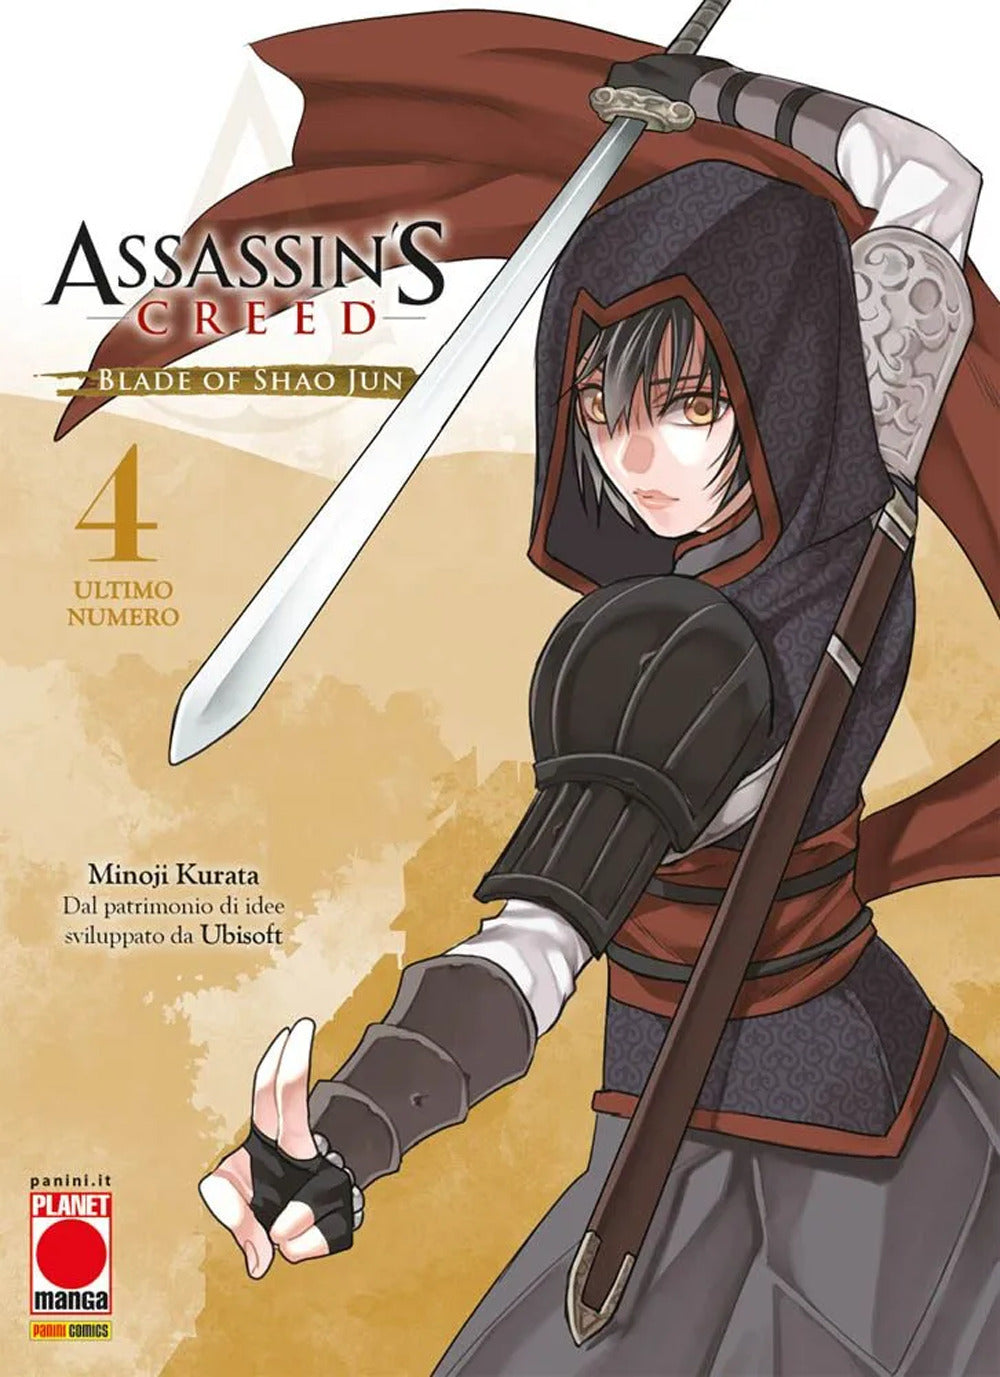 Blade of Shao Jun. Assassin's Creed. Vol. 4.